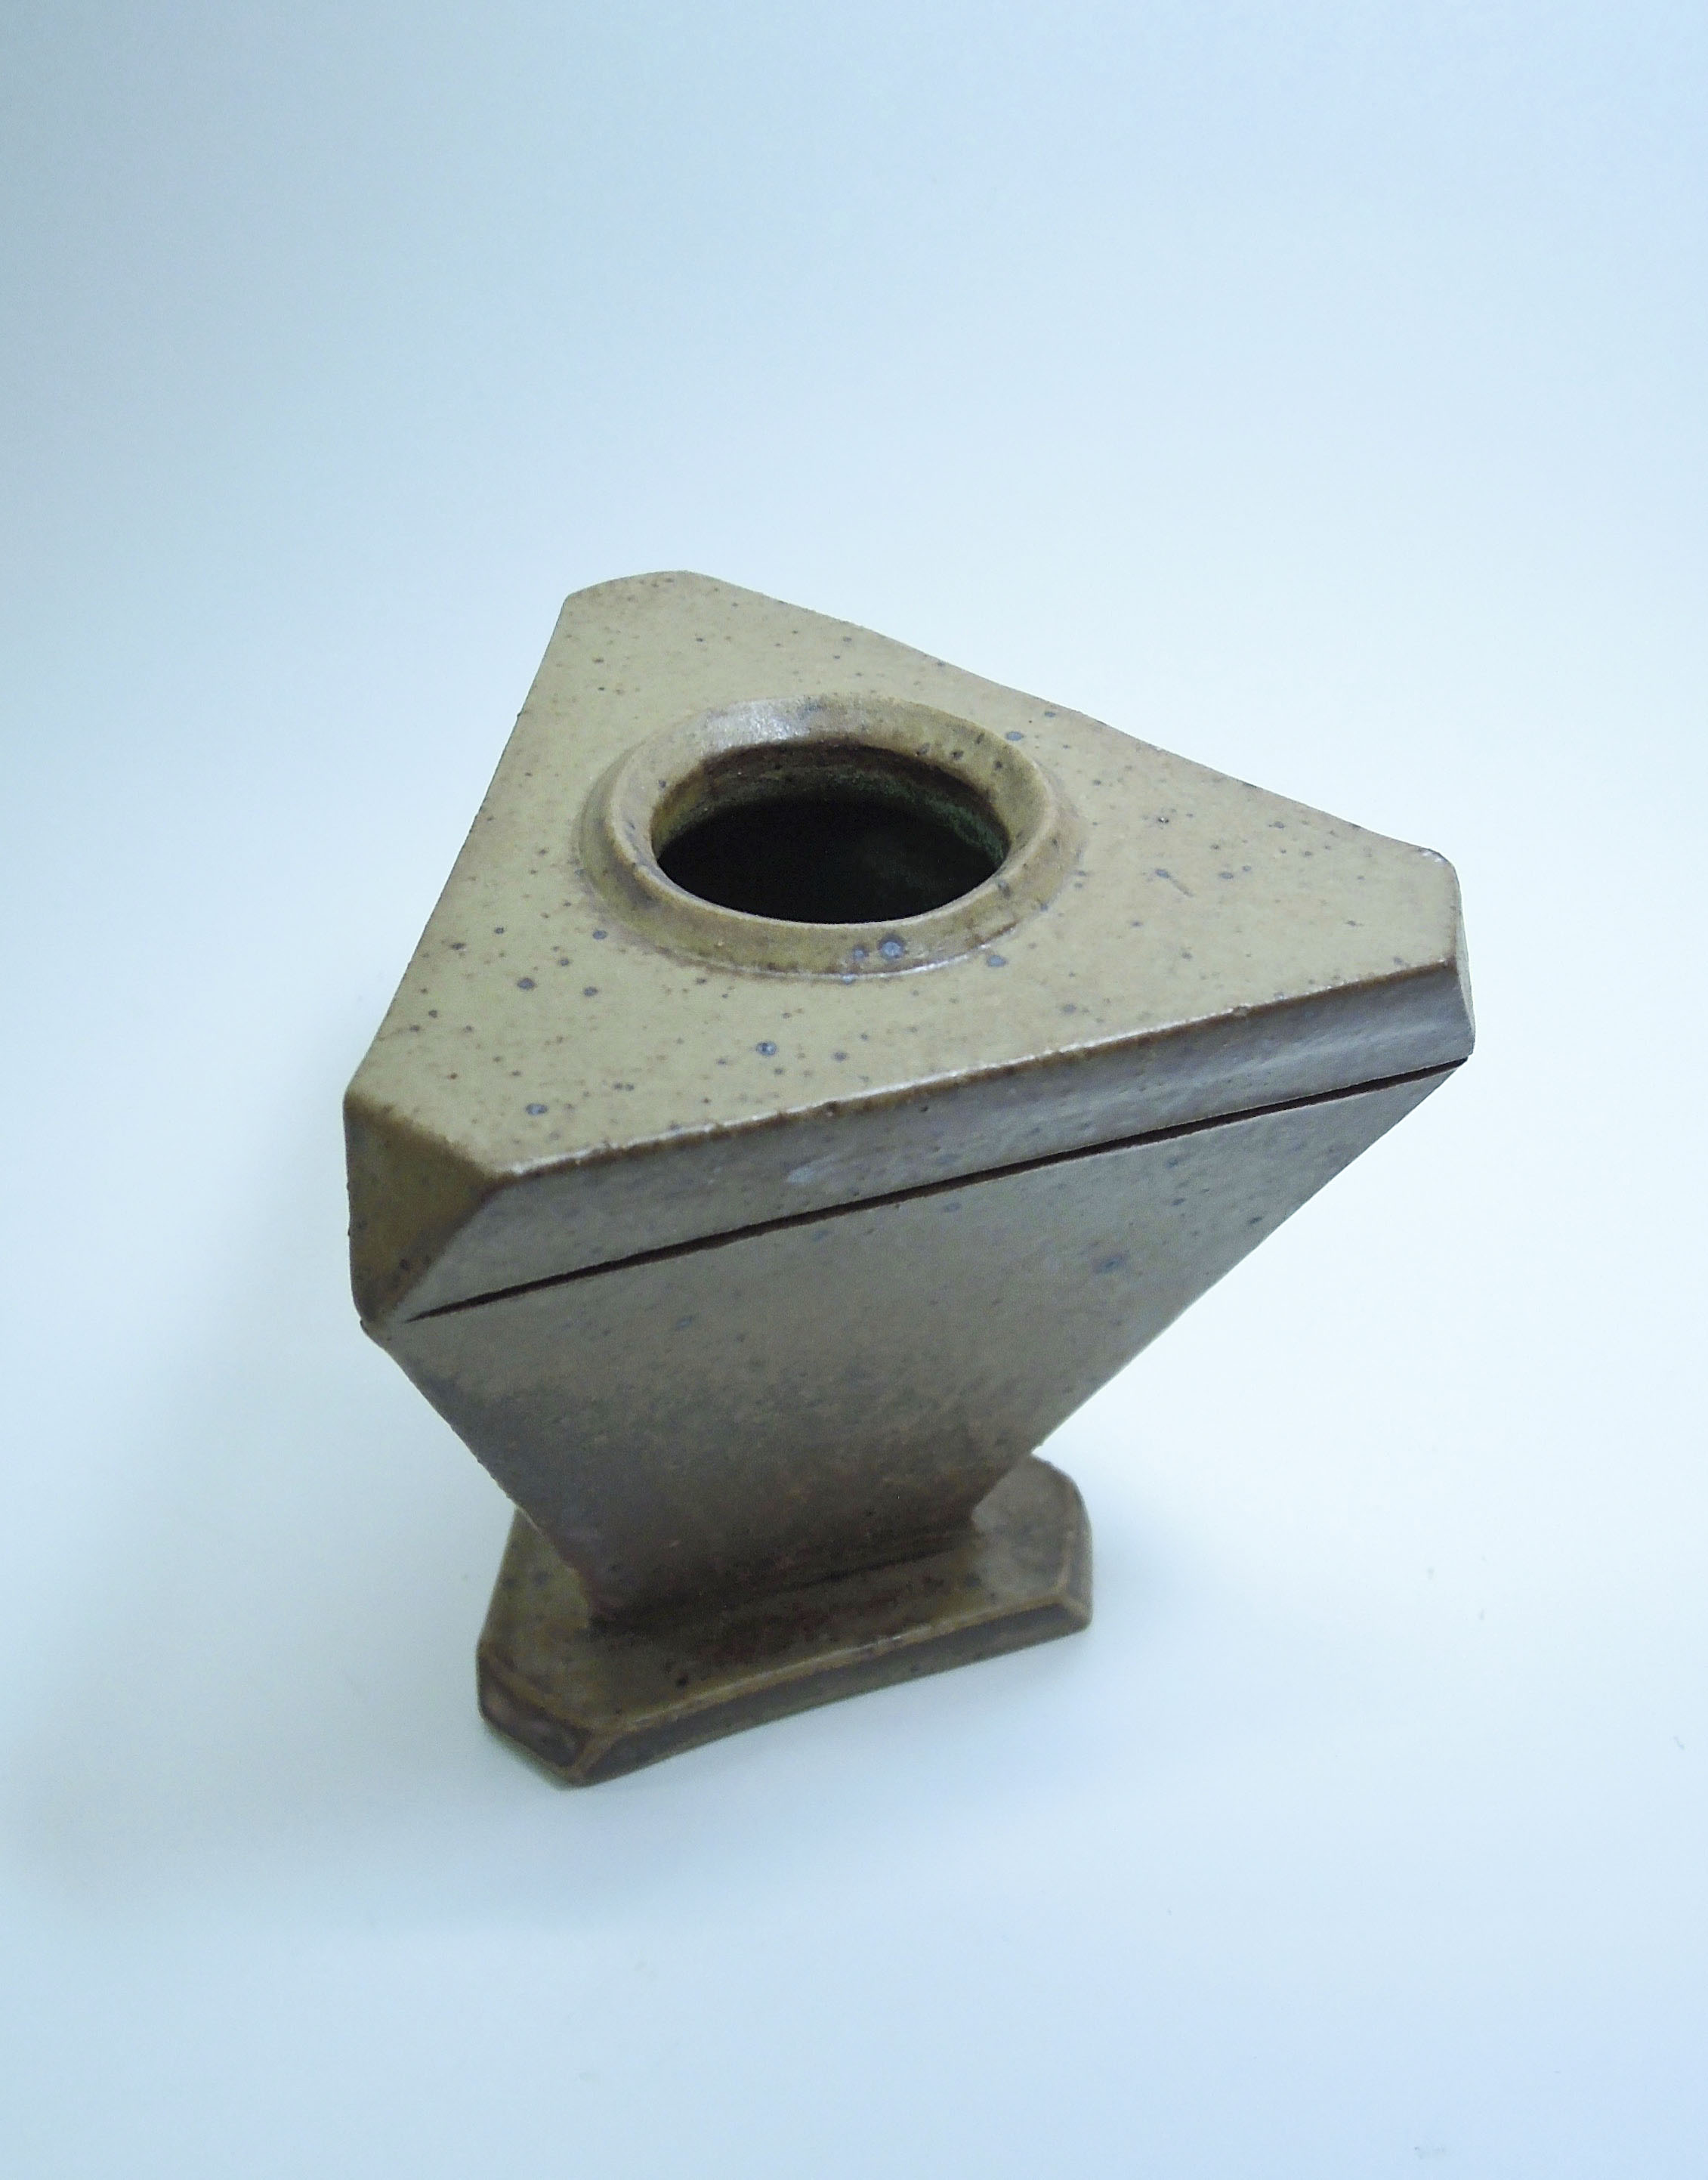     Tri-corner   Vase   brown stoneware, soda fired  6”x 6” x” 2019   